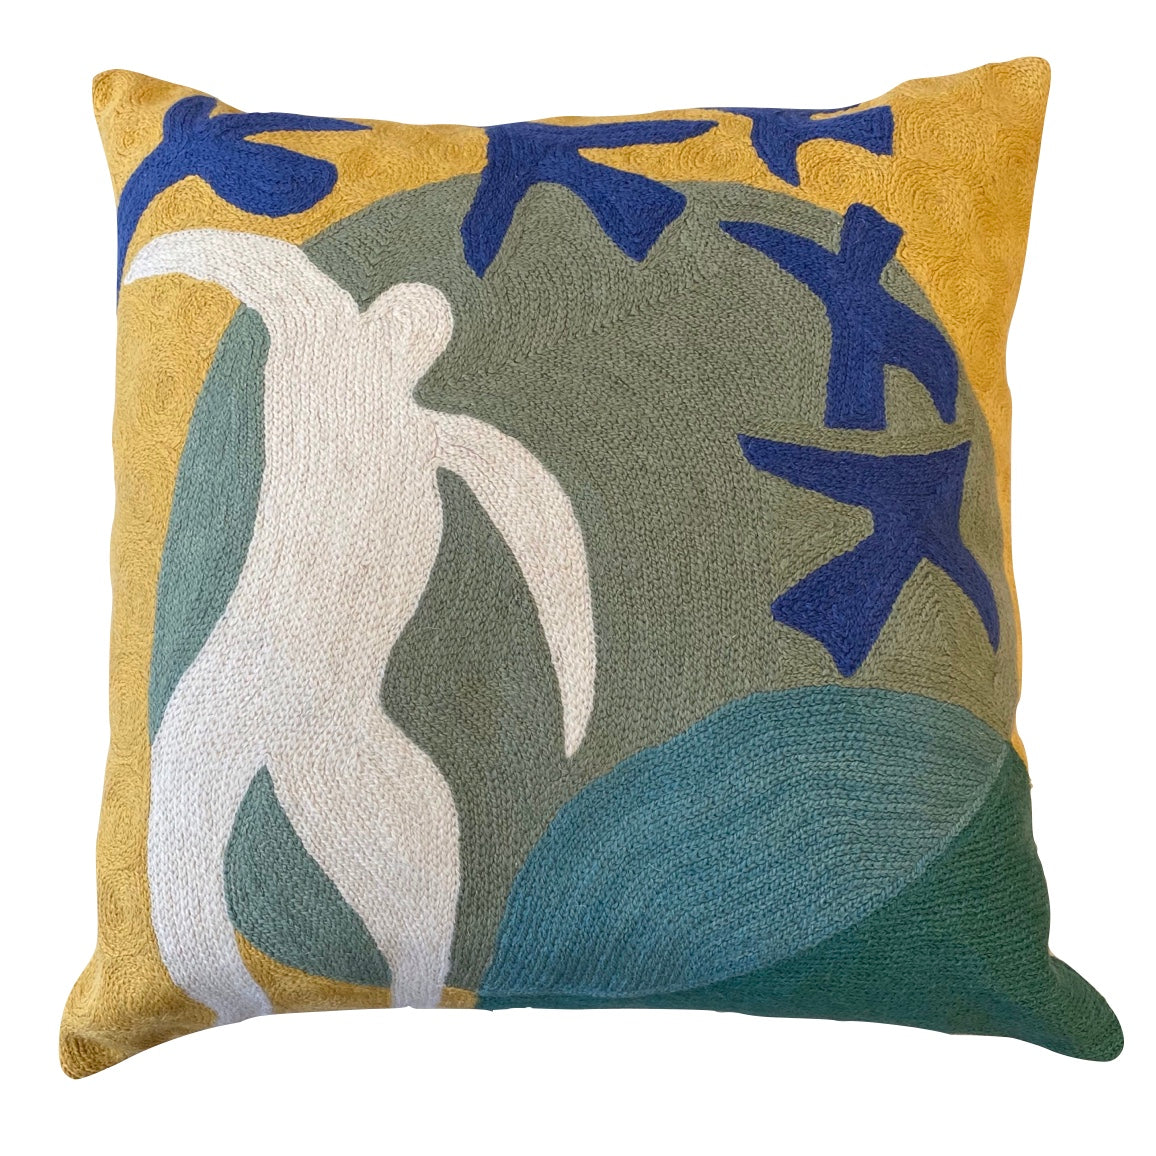 Matisse Man and Bird Chainstitch Pillow